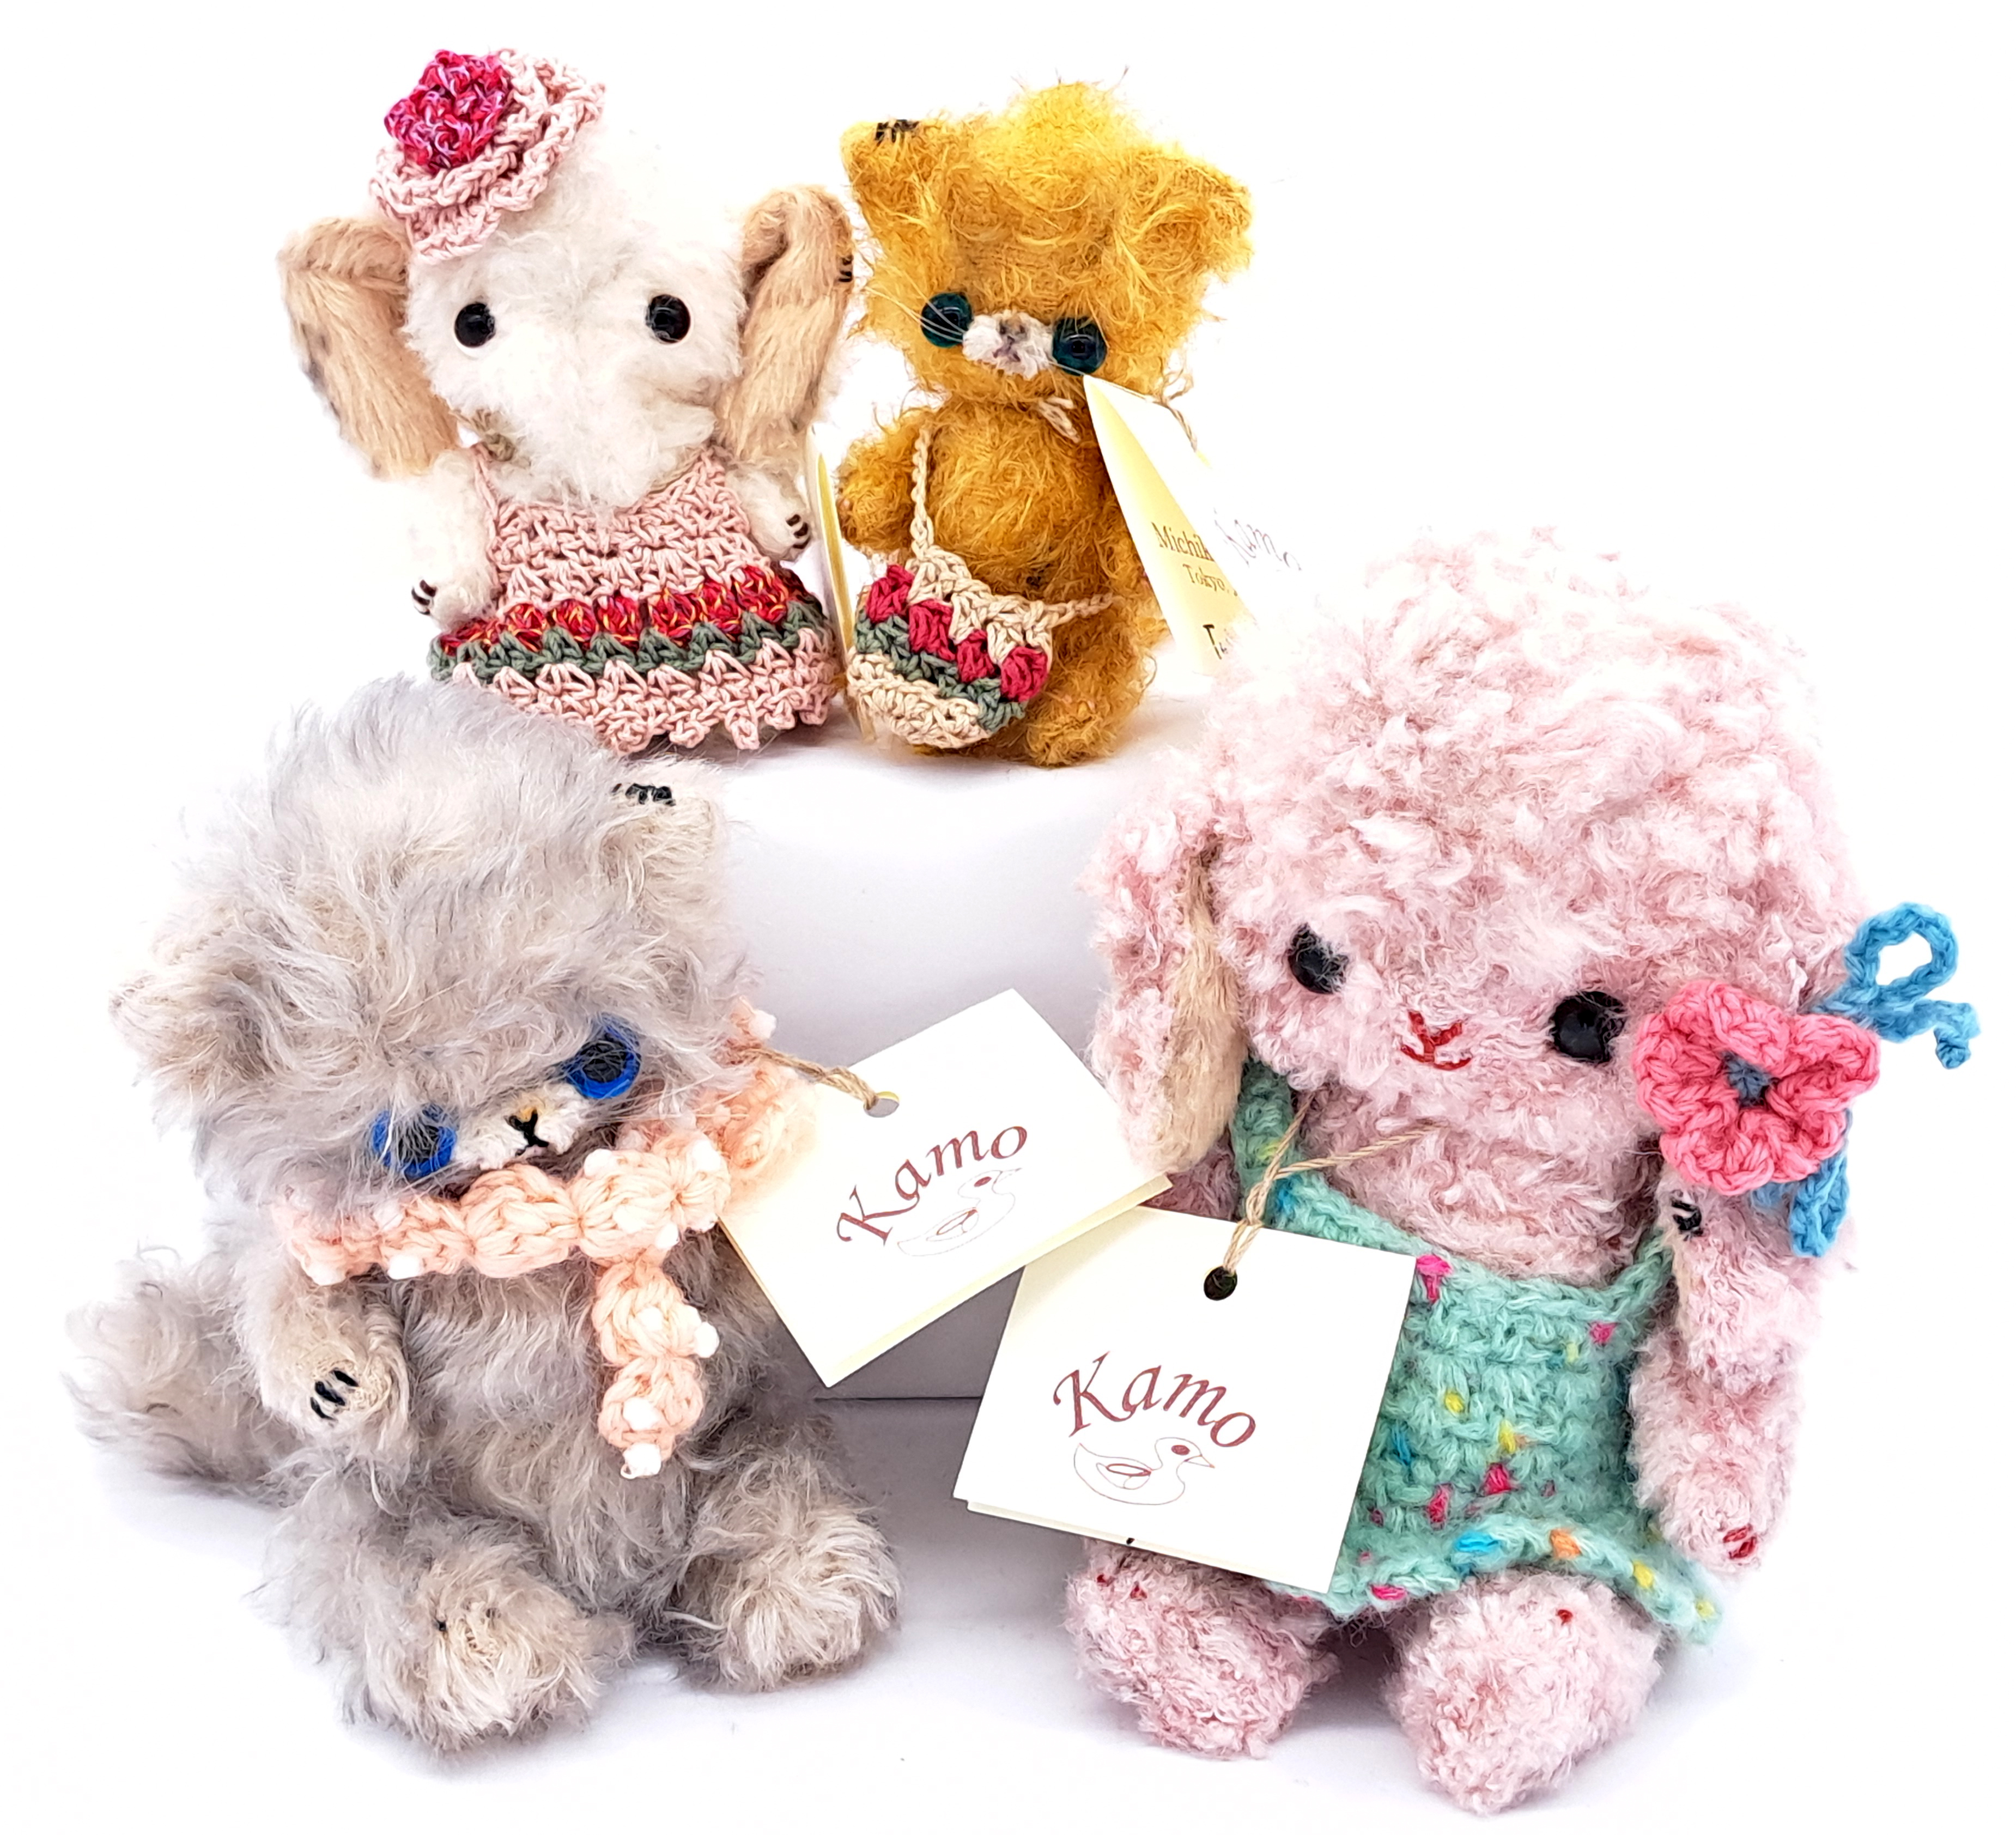 Michiko Kamo artist designed teddy bears x 4